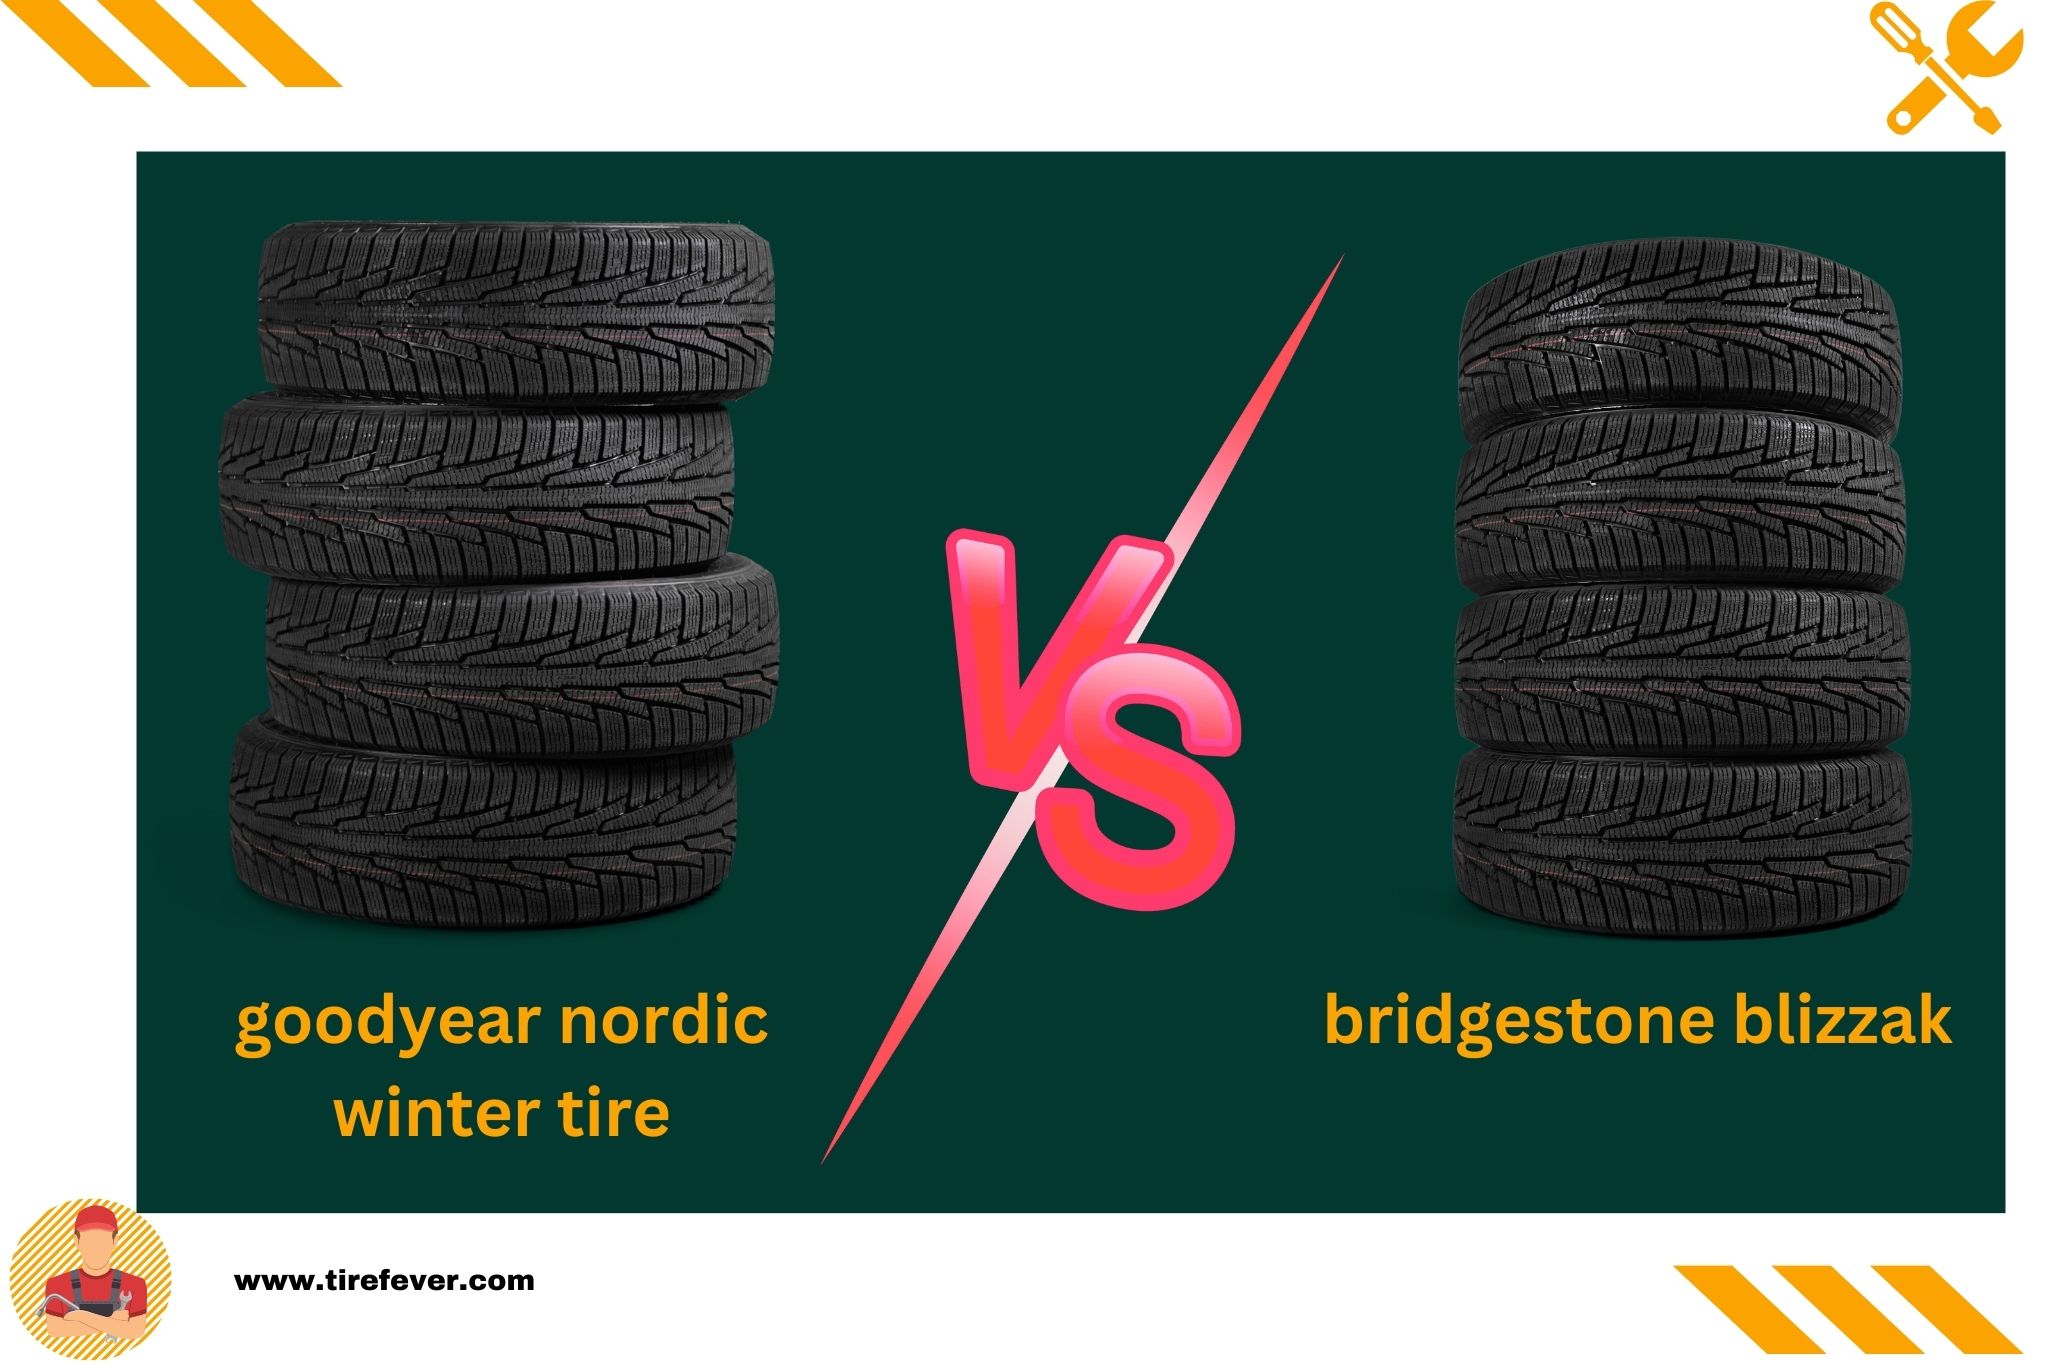 goodyear nordic winter tire vs bridgestone blizzak